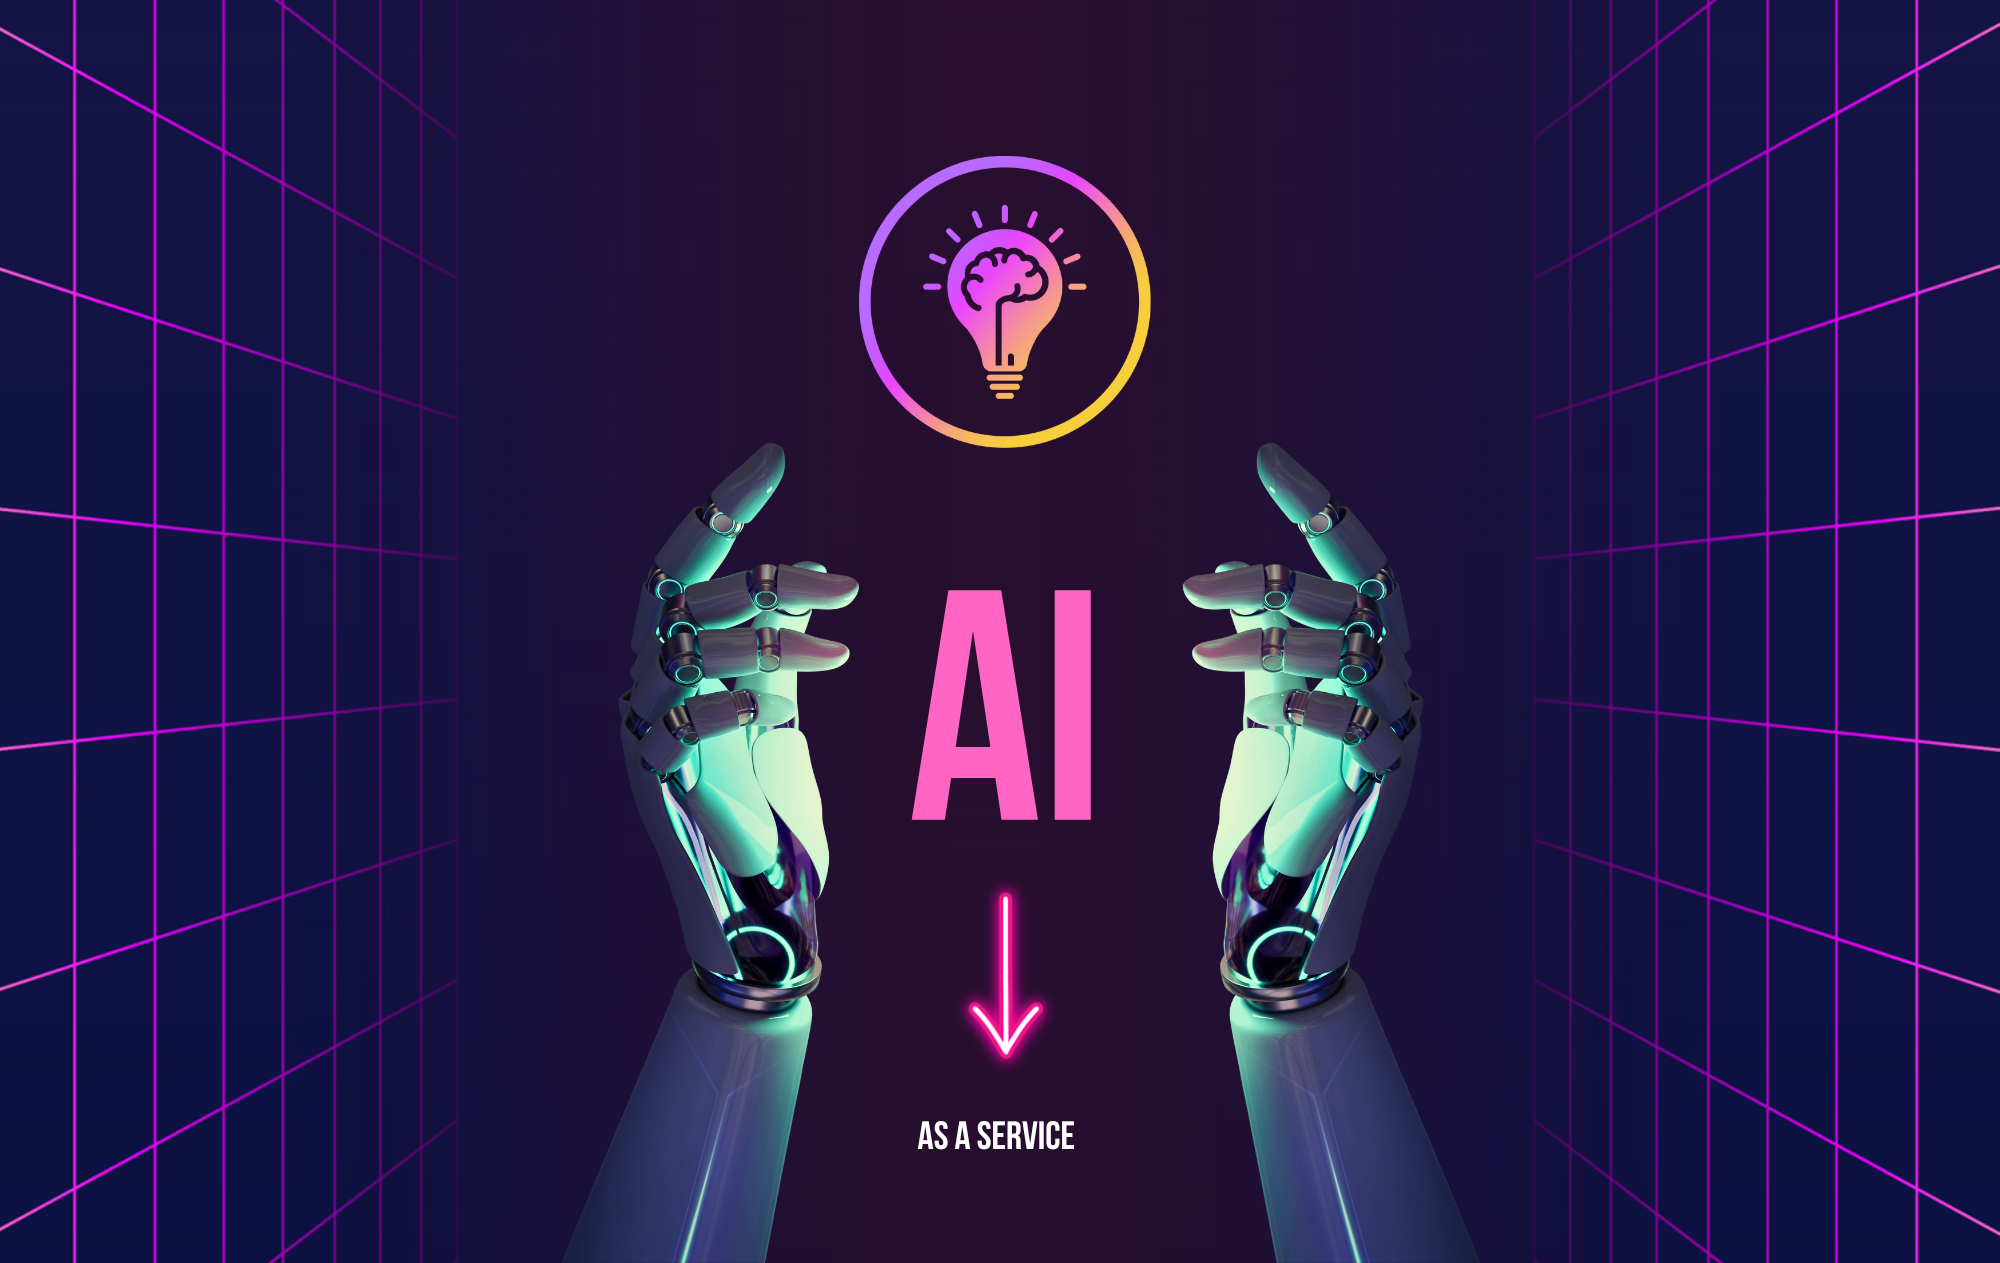 AI as a service